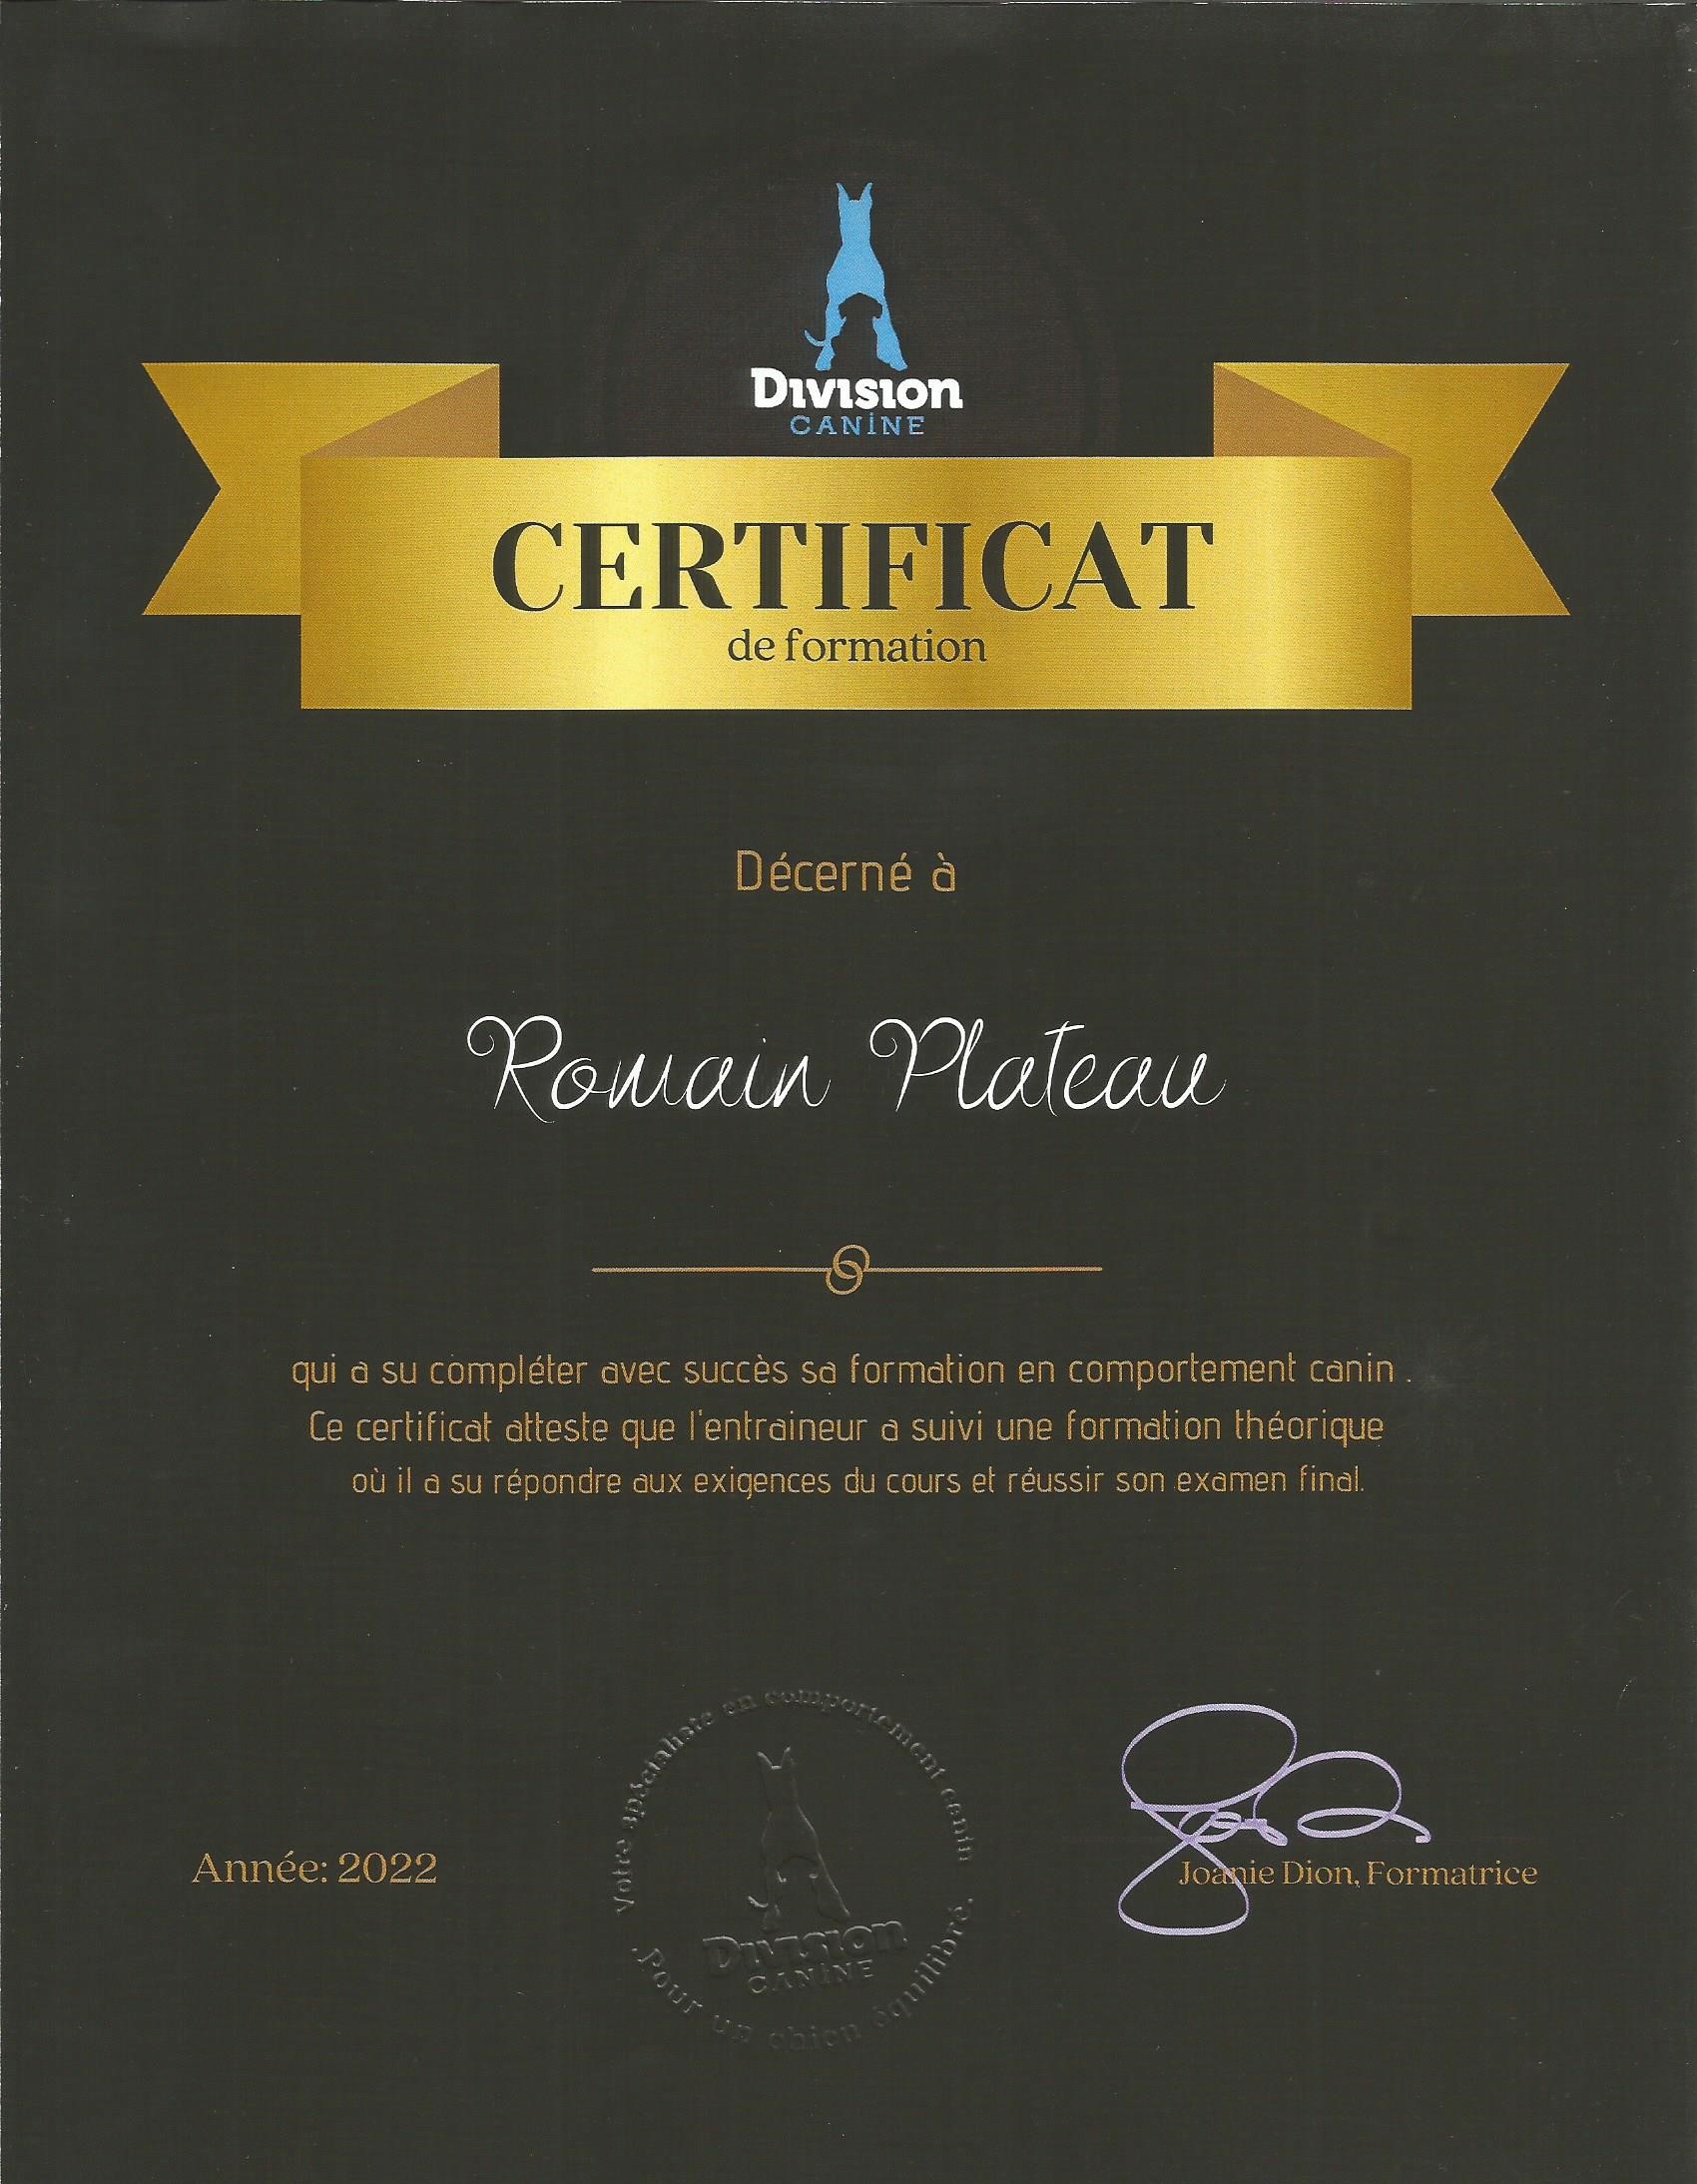 Certificat de Formation Division Canine